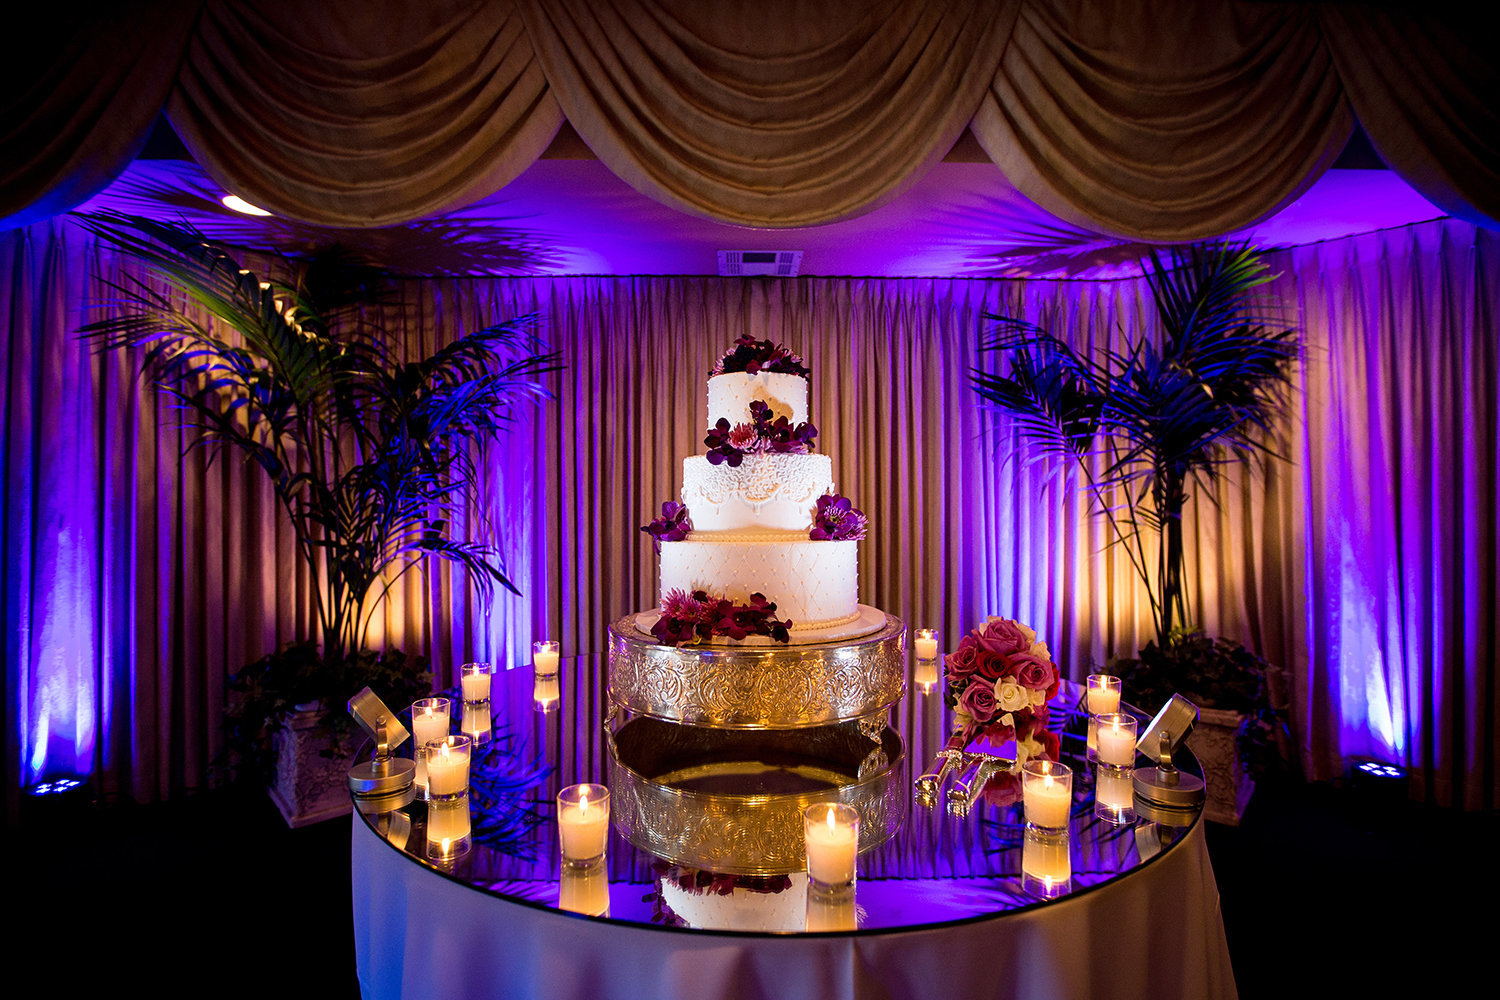 Grand Tradition wedding photos beautiful cake